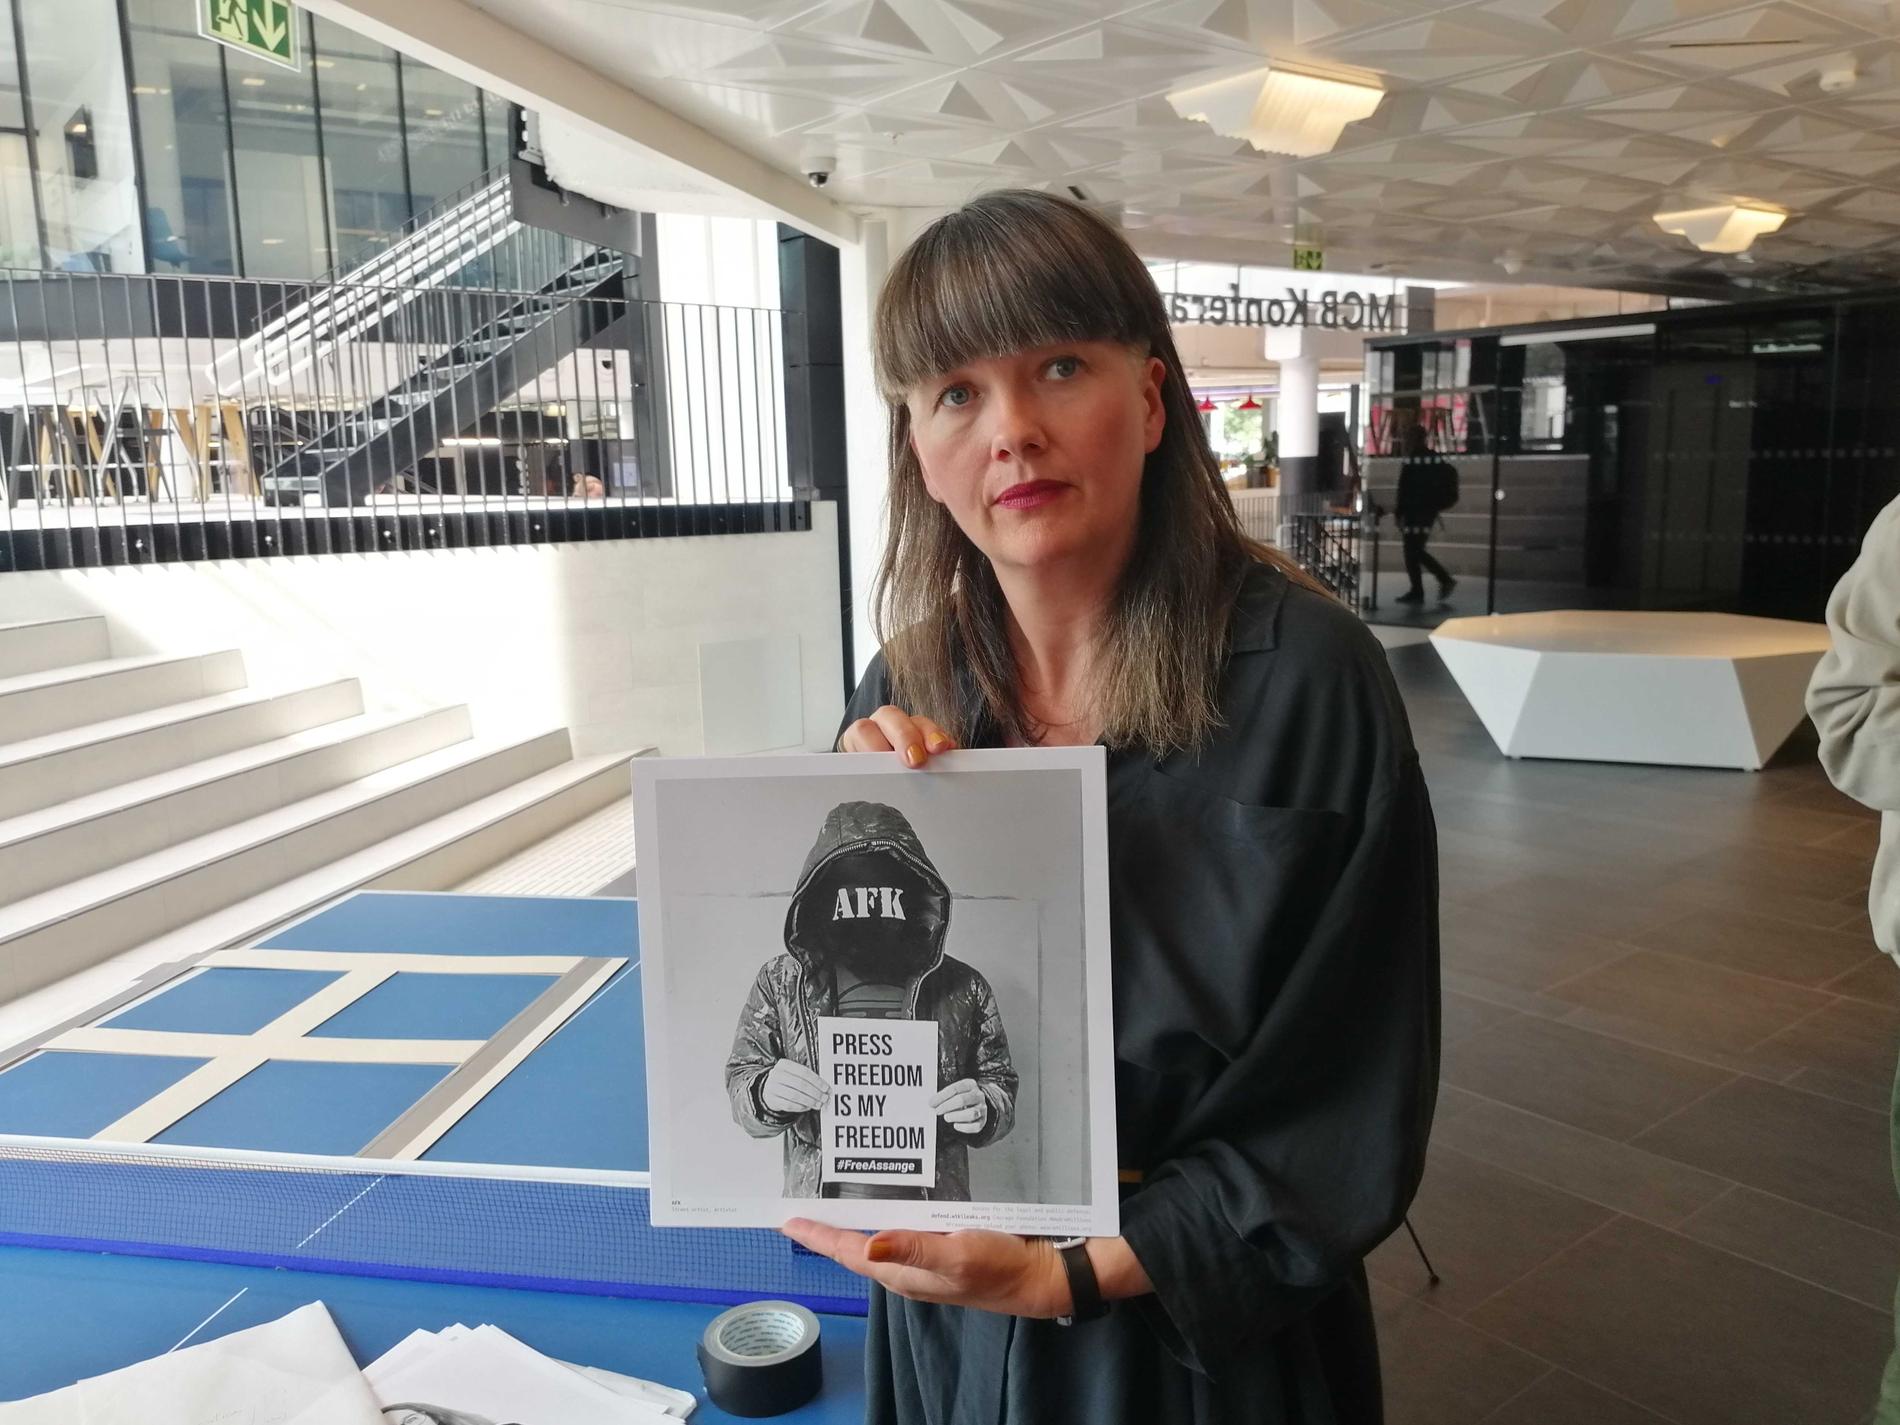 HOLDT APPELL: Gitte Sætre, som er talsperson for AFK, fremførte en appell om Julian Assange og utstillingen ved nyåpningen. 